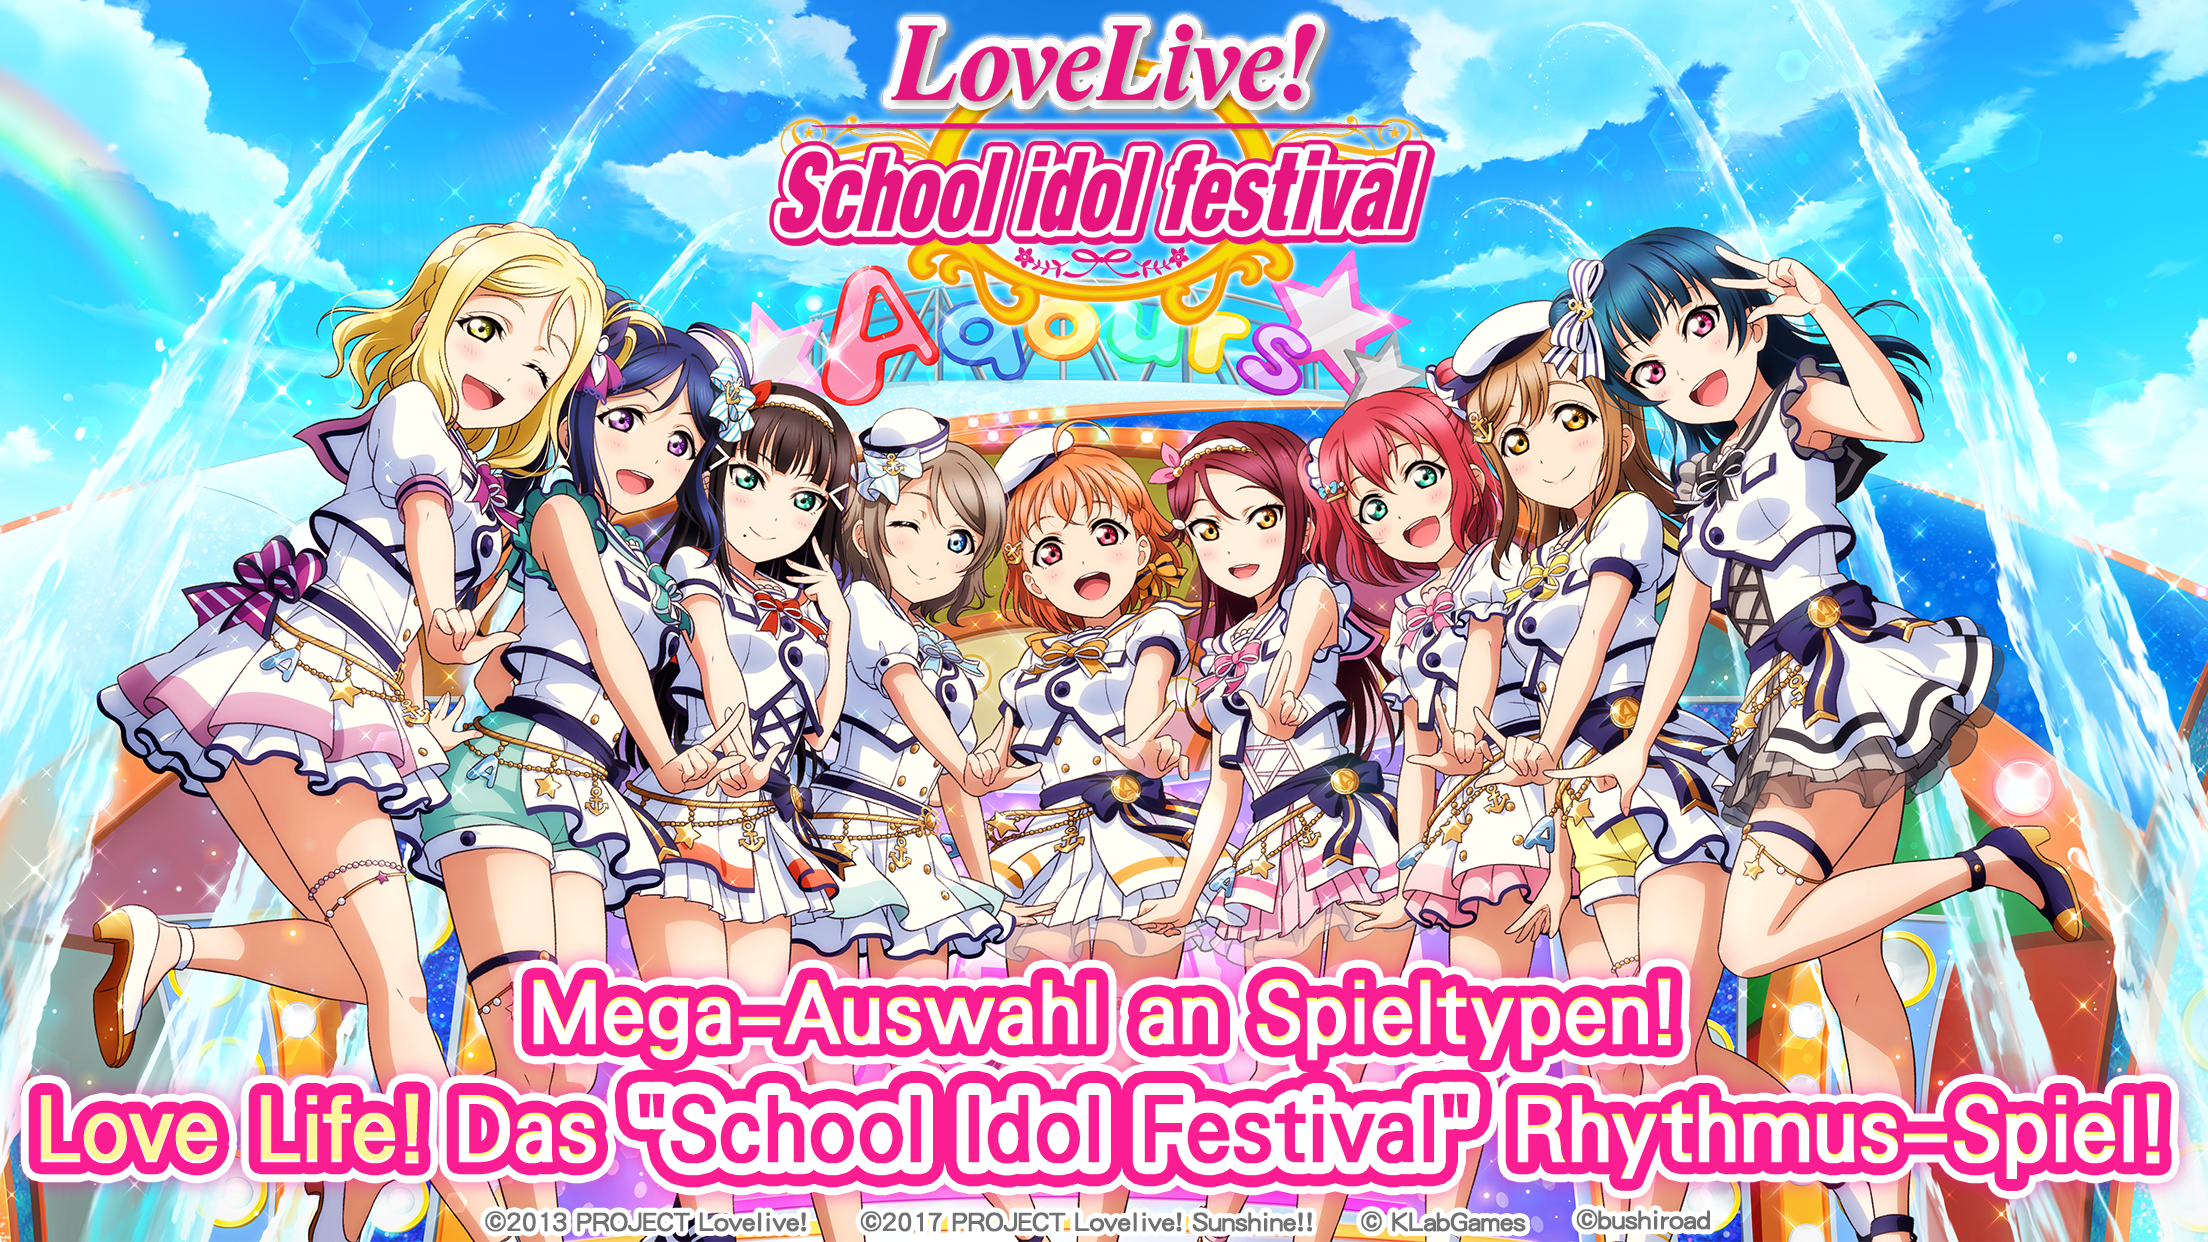 Screenshot 1 of Love Live!School idol festival 9.11